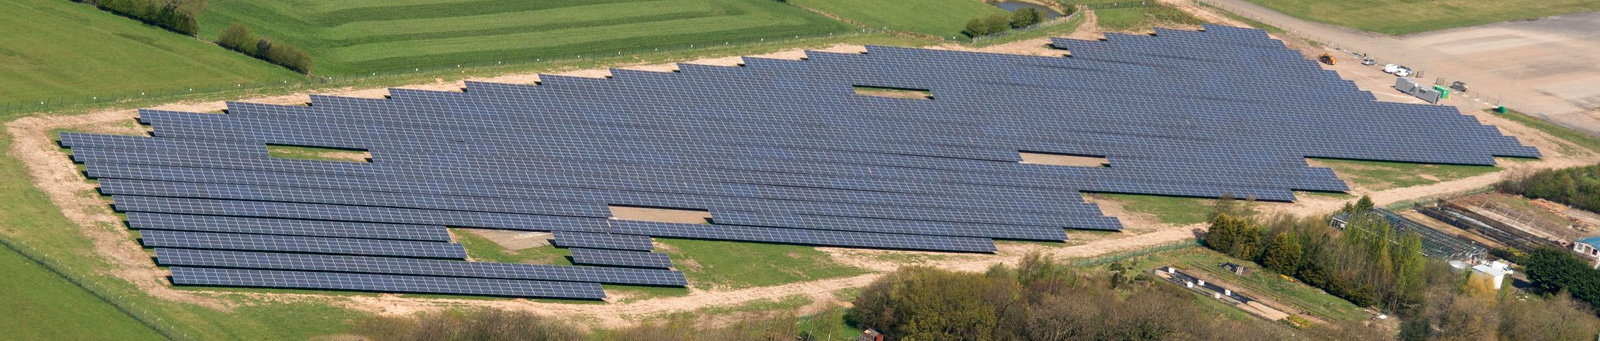 Our Samlesbury solar panels